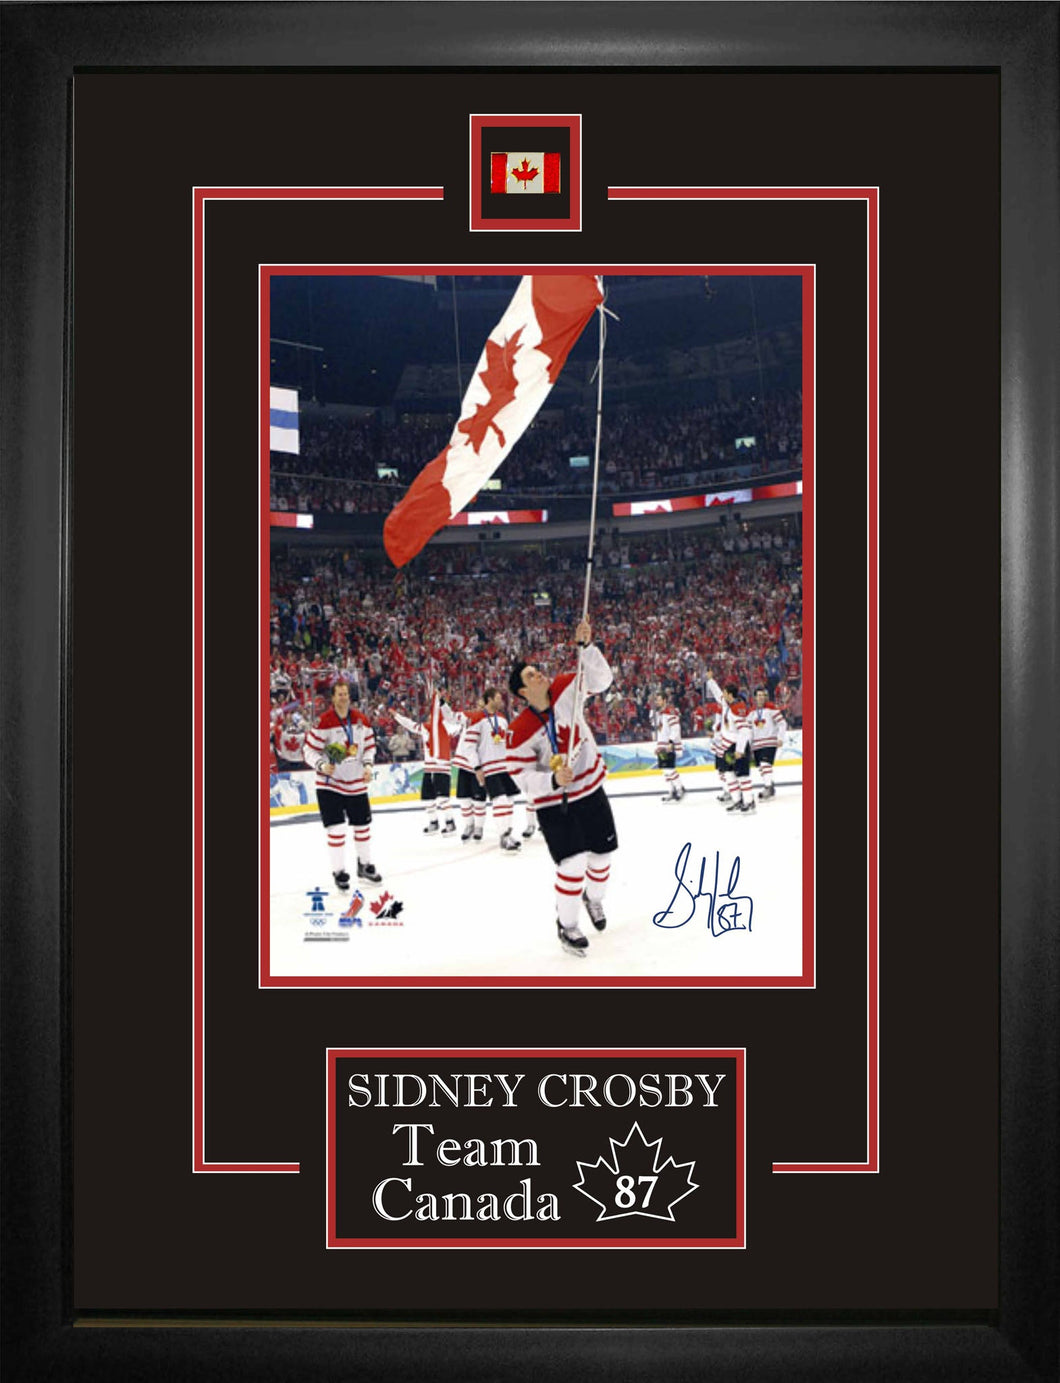 Sidney Crosby Team Canada Signed Framed 8x10 Carrying Canadas Flag 2010 Olympics Photo